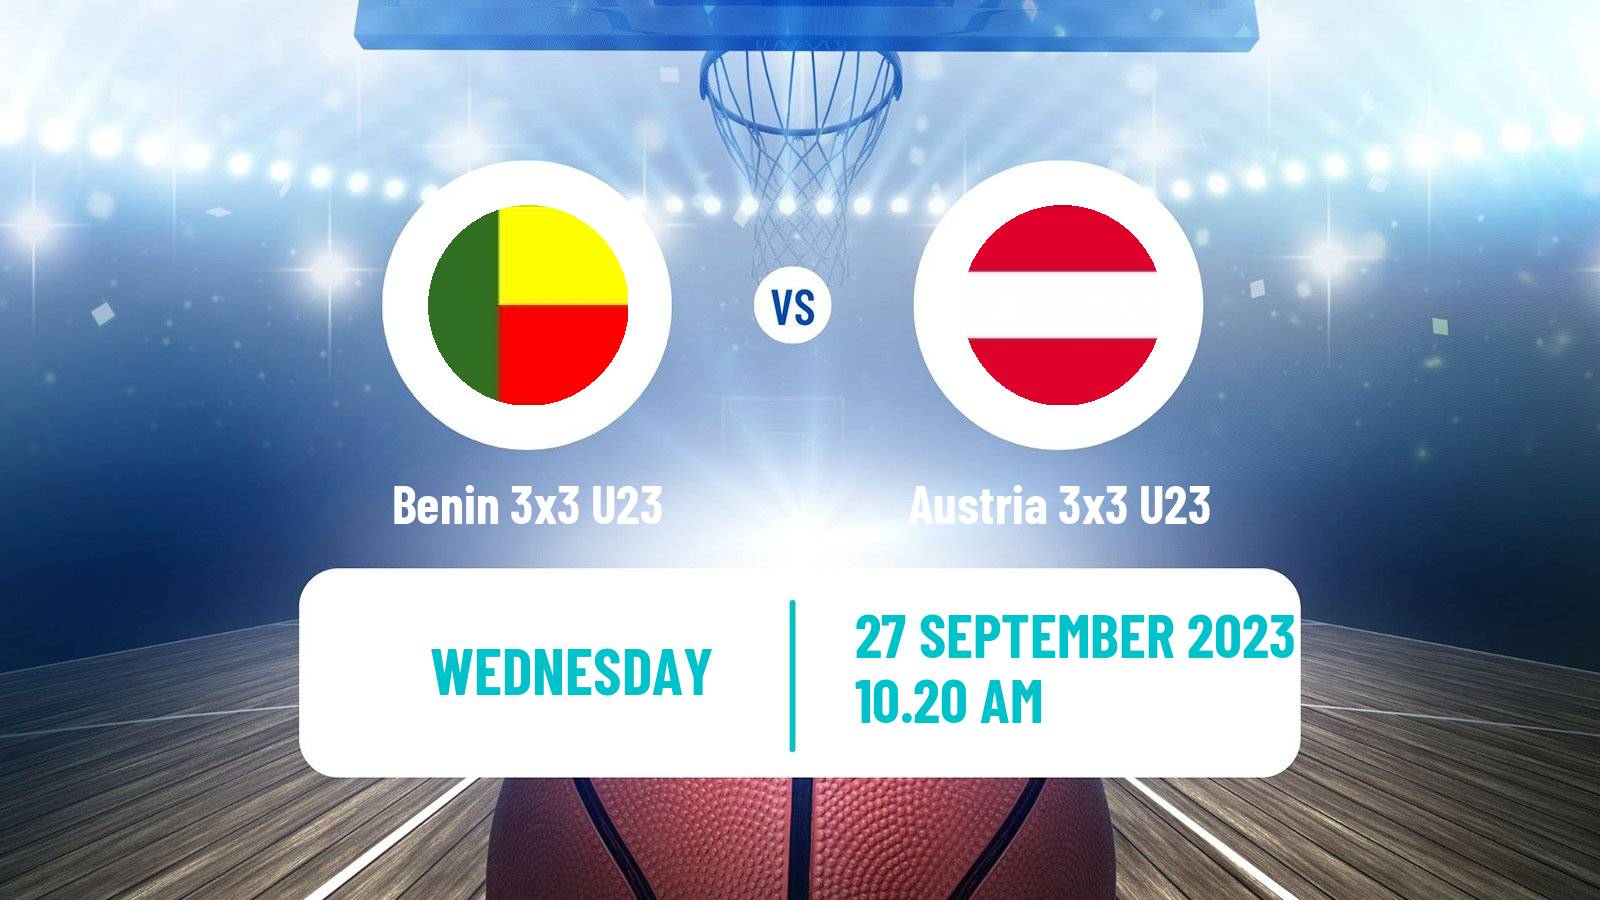 Basketball World Cup Basketball 3x3 U23 Benin 3x3 U23 - Austria 3x3 U23